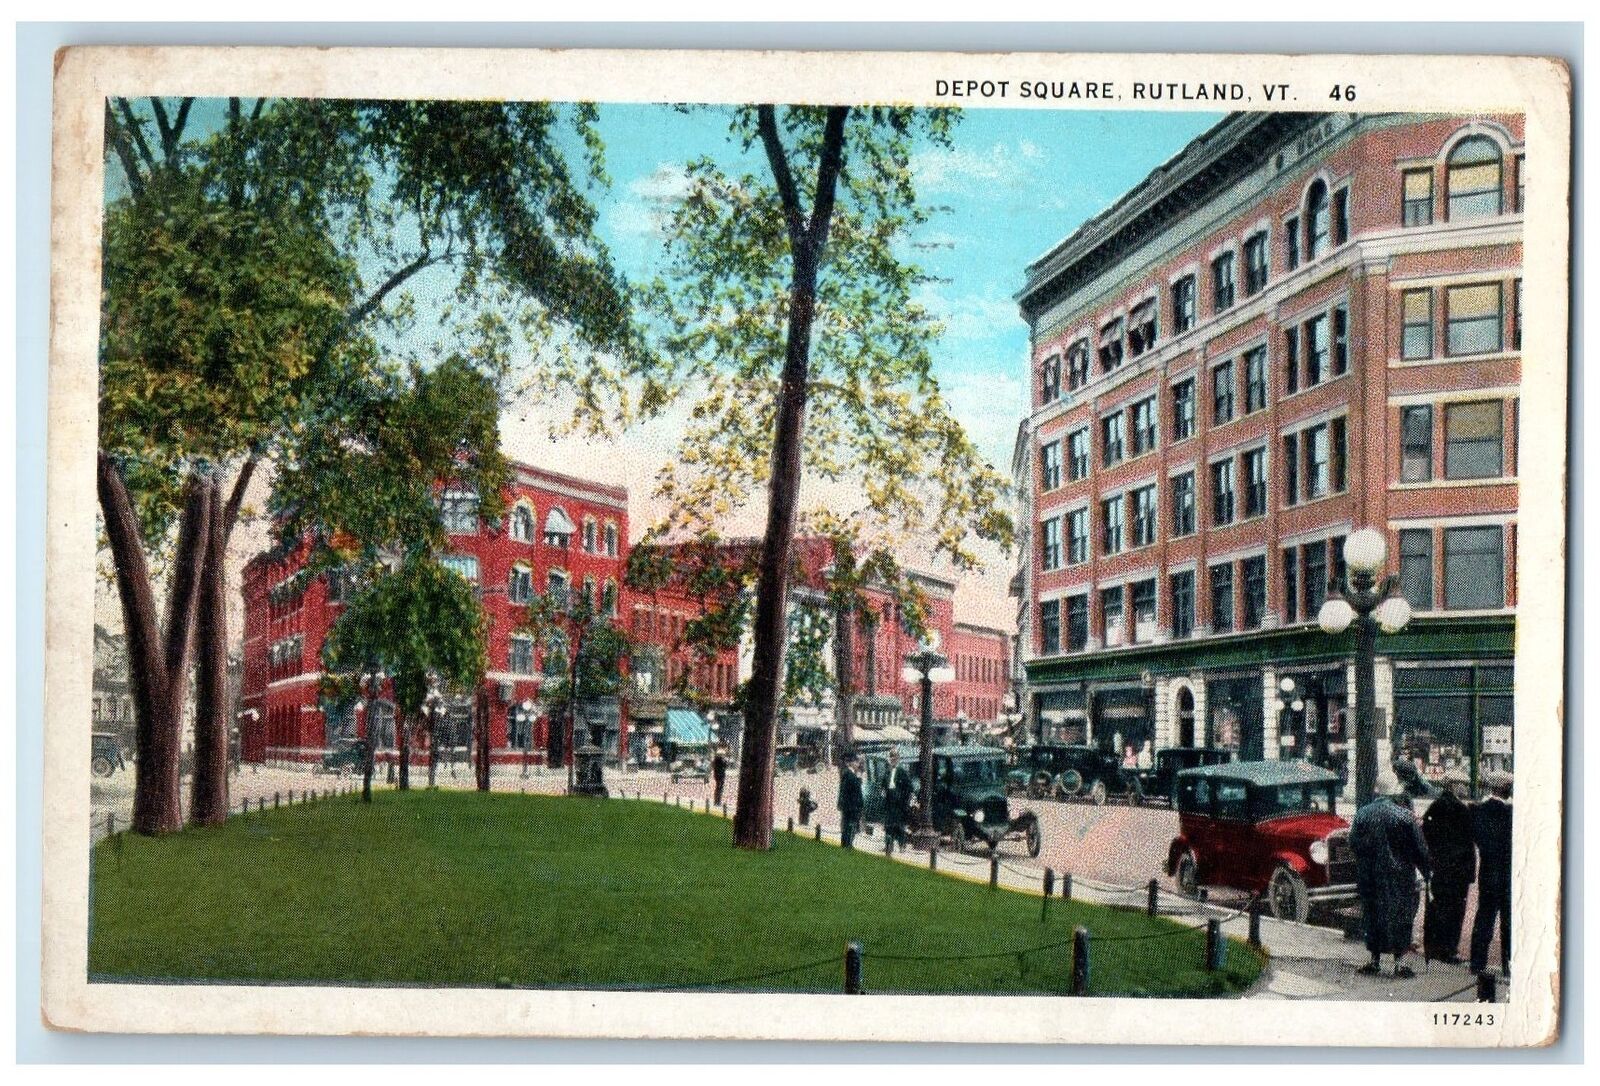 1931 Depot Square Classic Cars Buildings Dirt Road Rutland Vermont VT Postcard